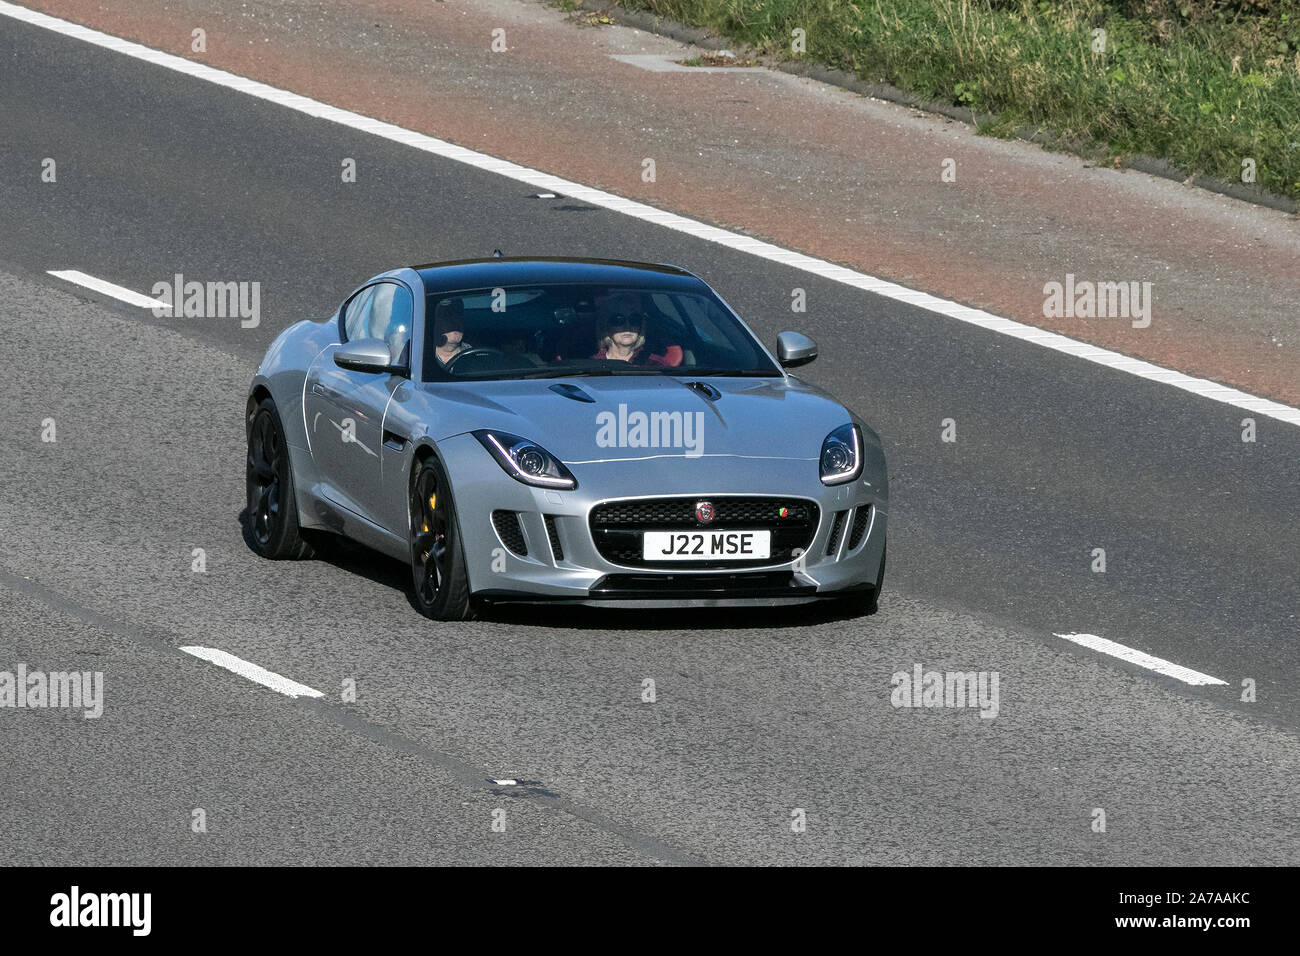 2015 silver Jaguar F-Type S V6 Auto; Vehicle traveling on the M6 motorway near Preston in Lancashire, UK Stock Photo